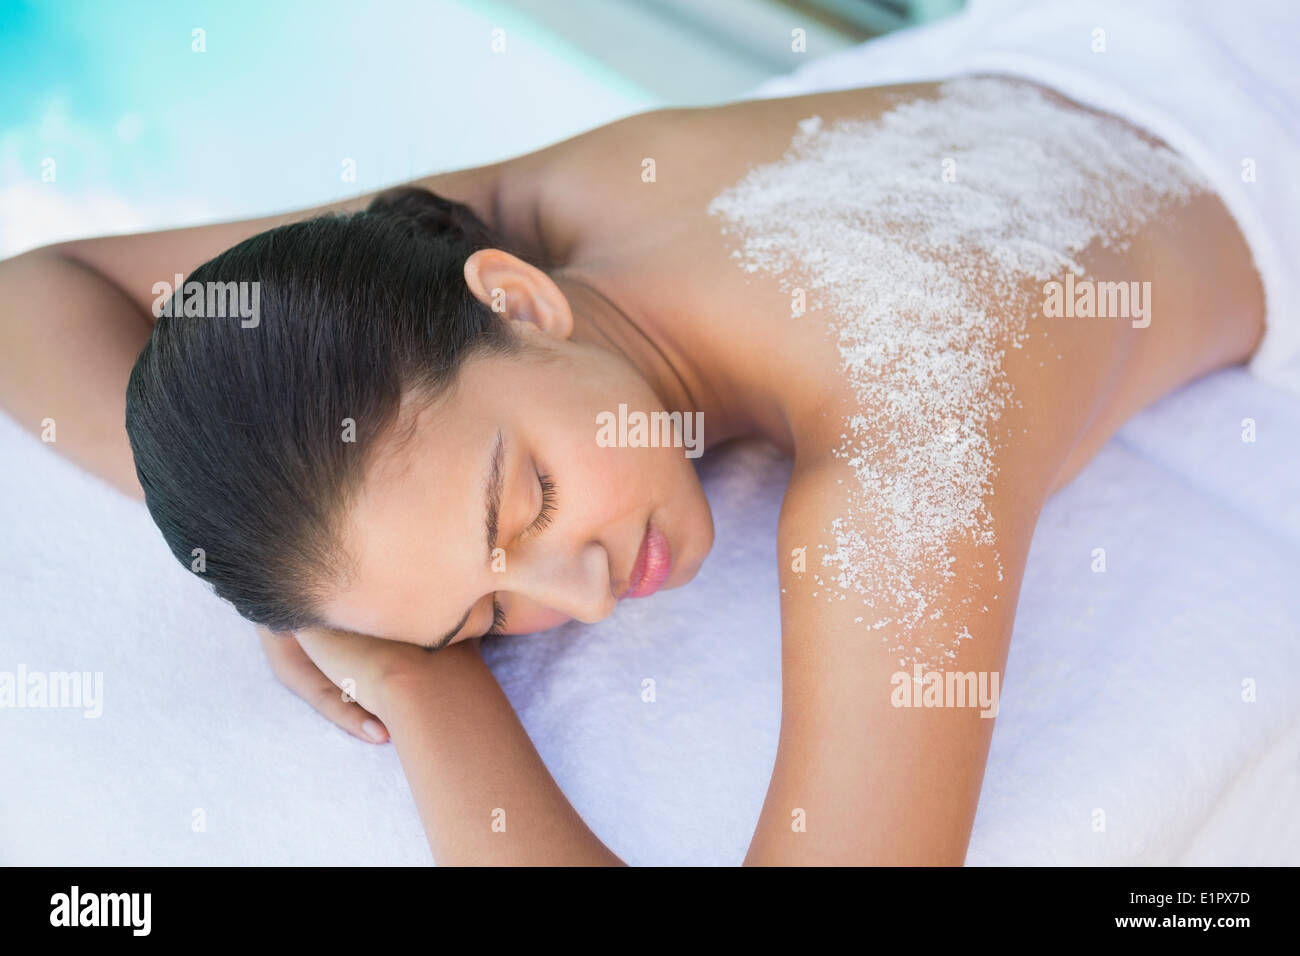 Calm brunette lying on towel with salt treatment on back Stock Photo